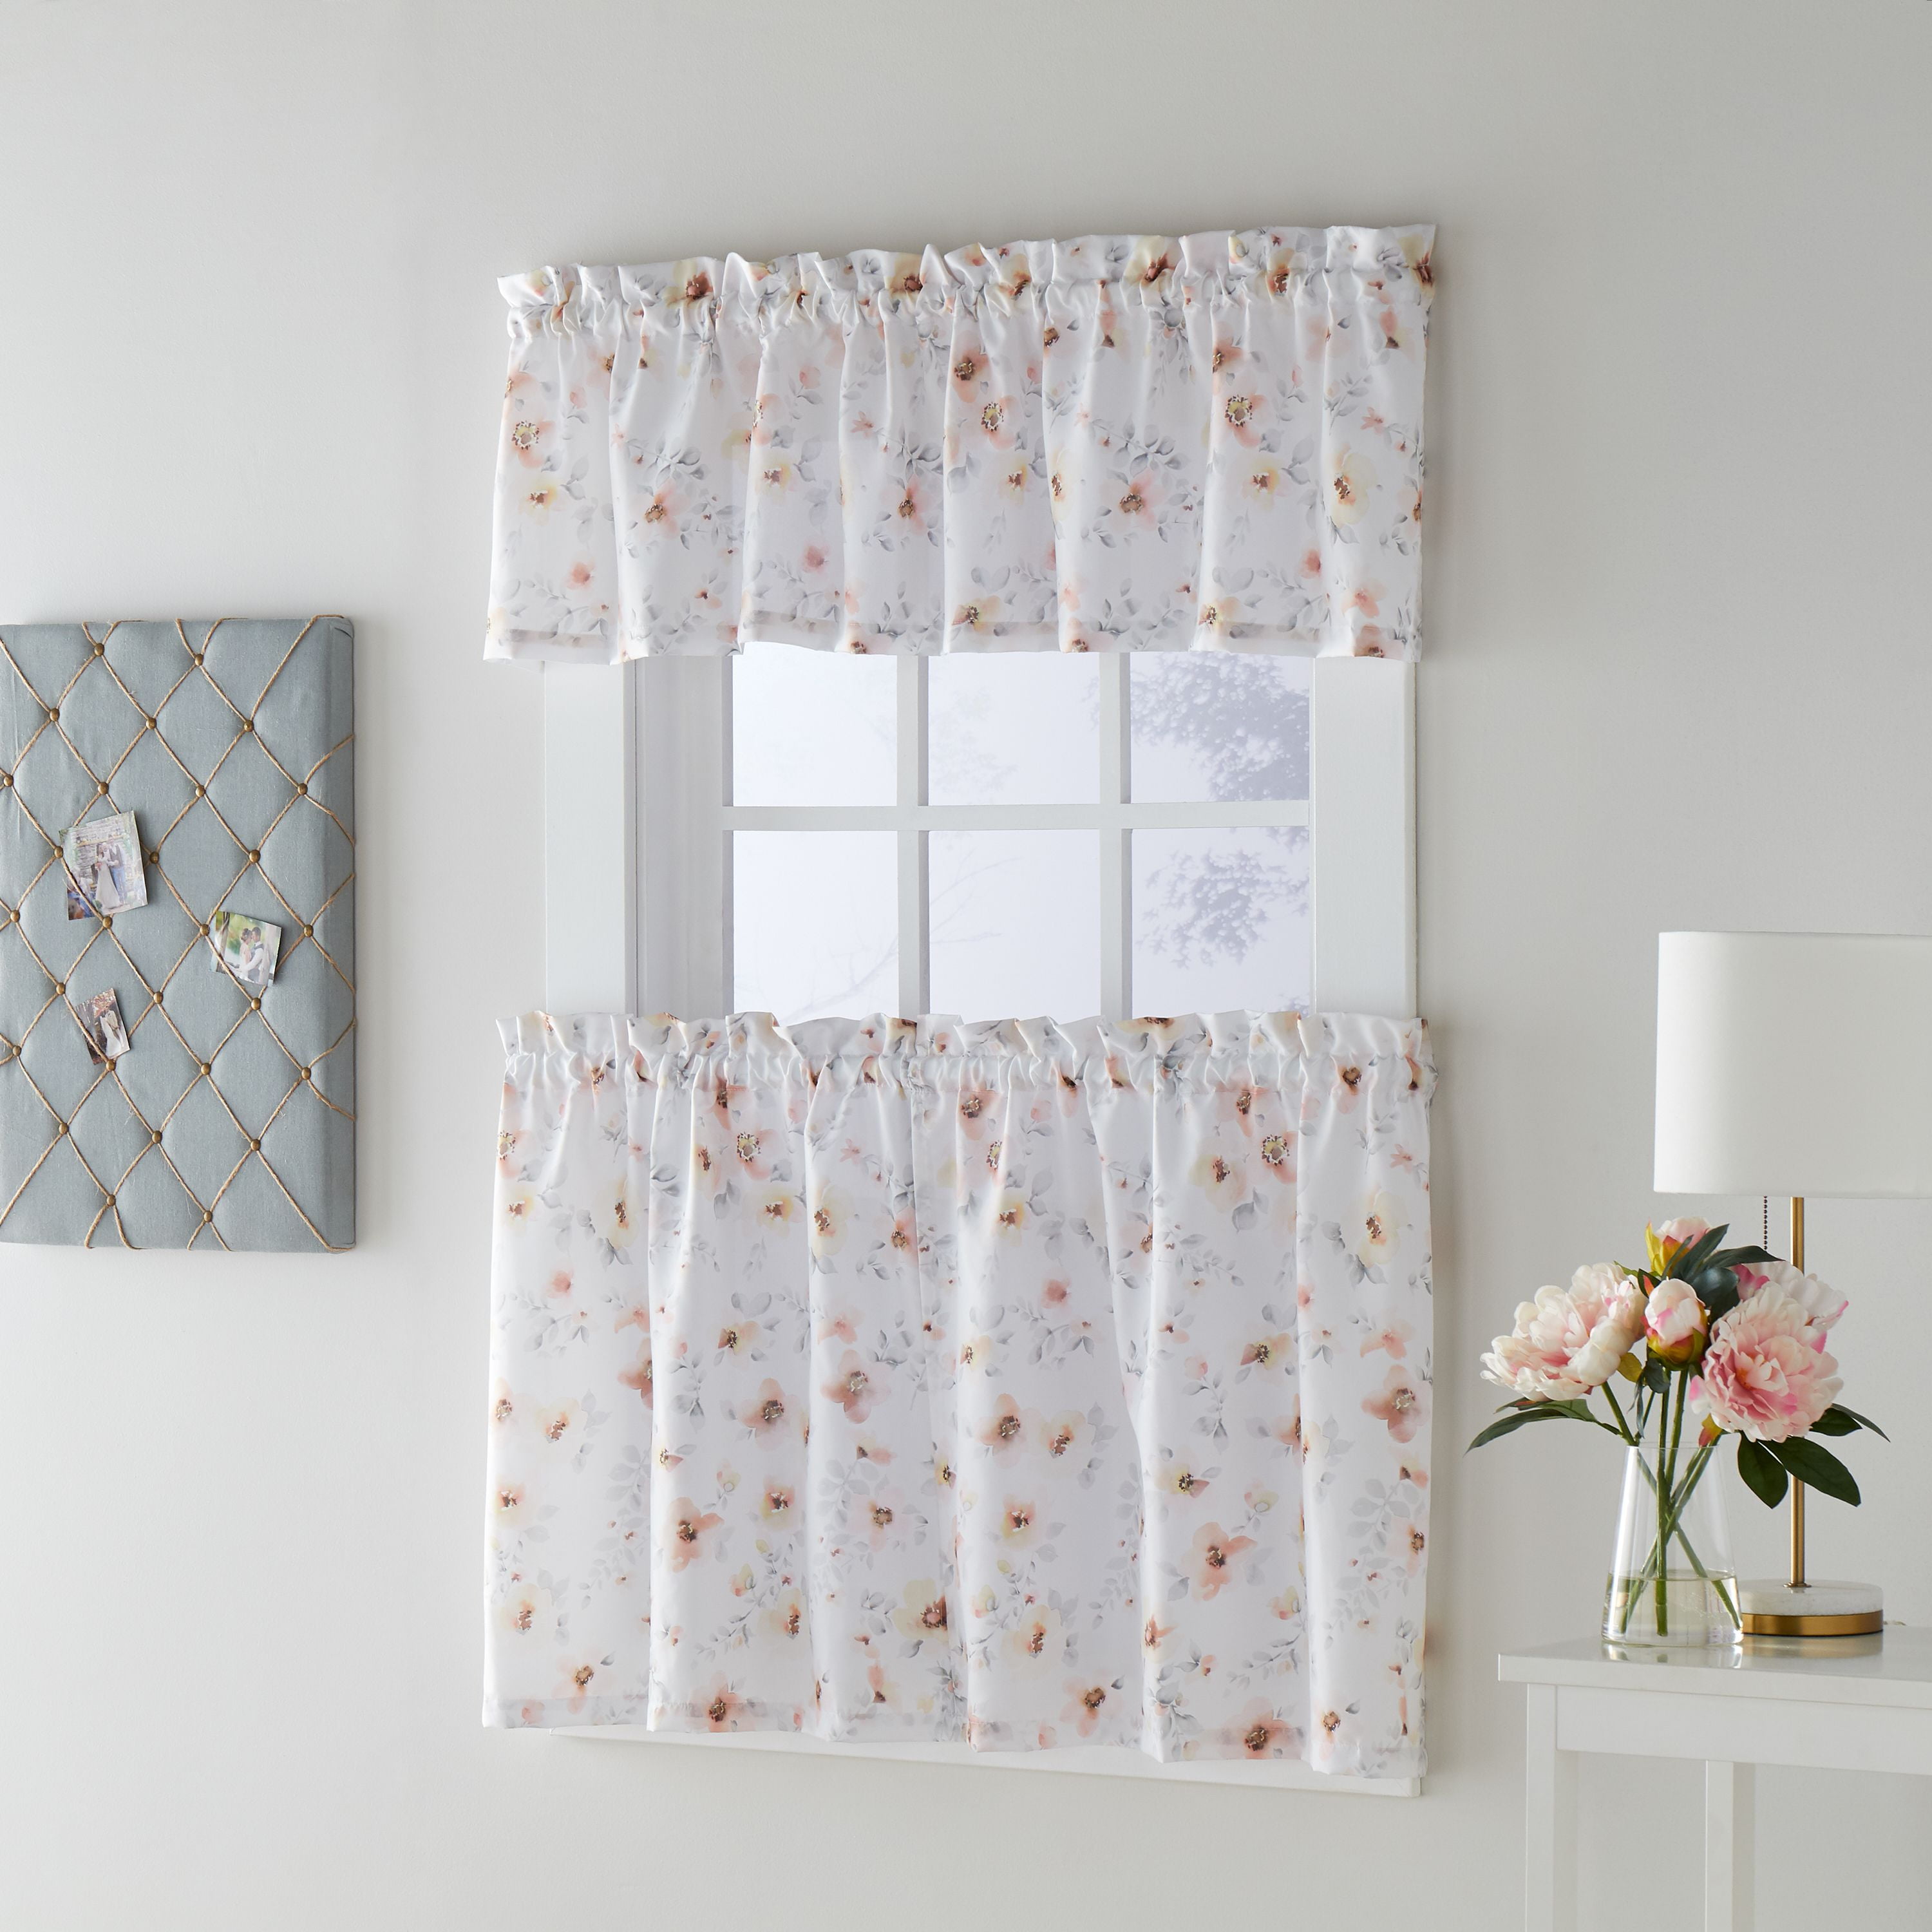 SKL Home Blushing Blooms Window Curtain Tier Pair or Valance - Walmart.com